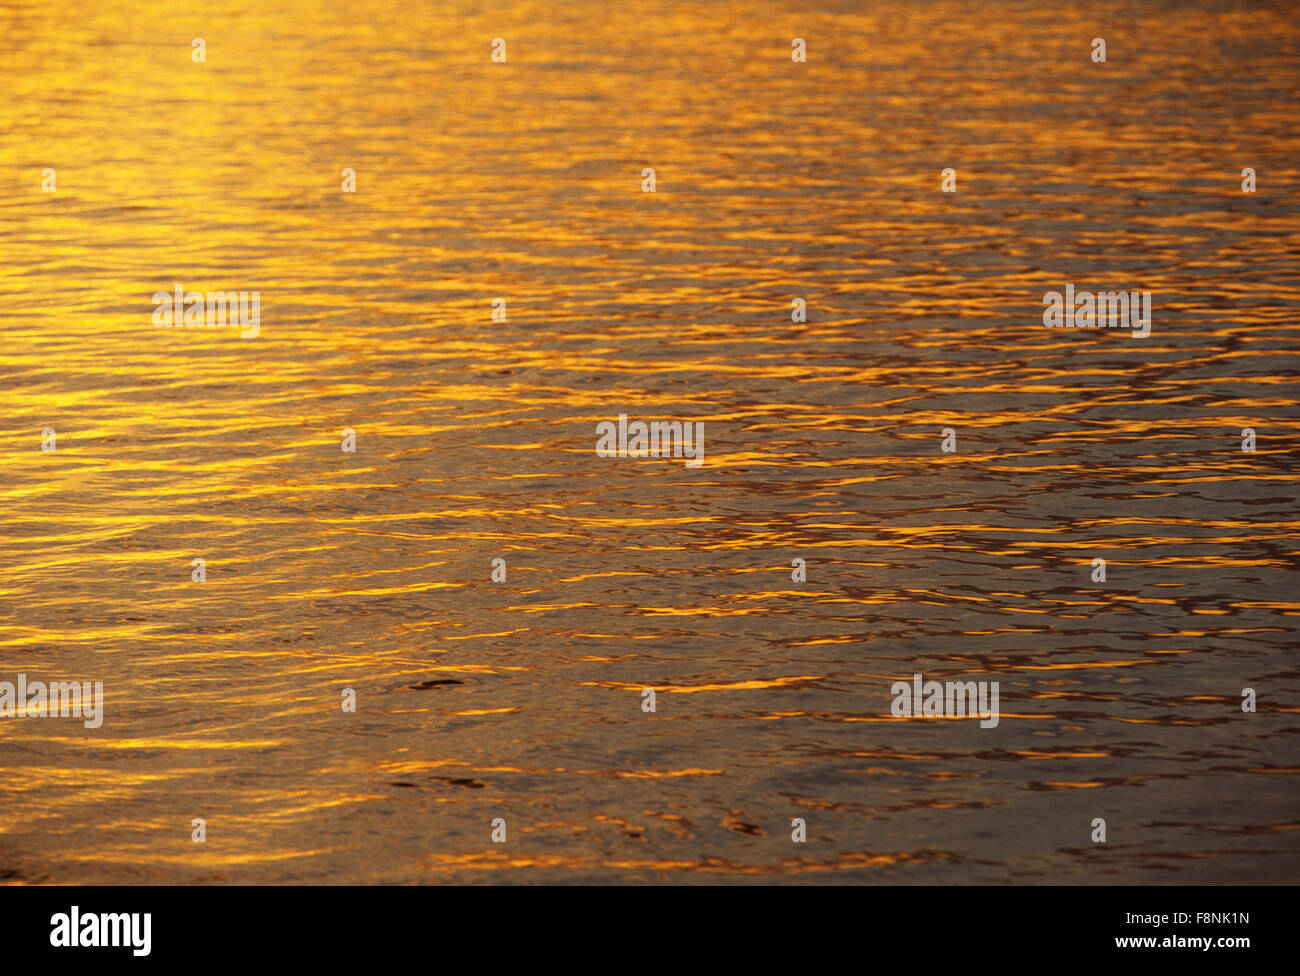 Fiji Islands, Taveuni, ocean, sunset color on water Stock Photo